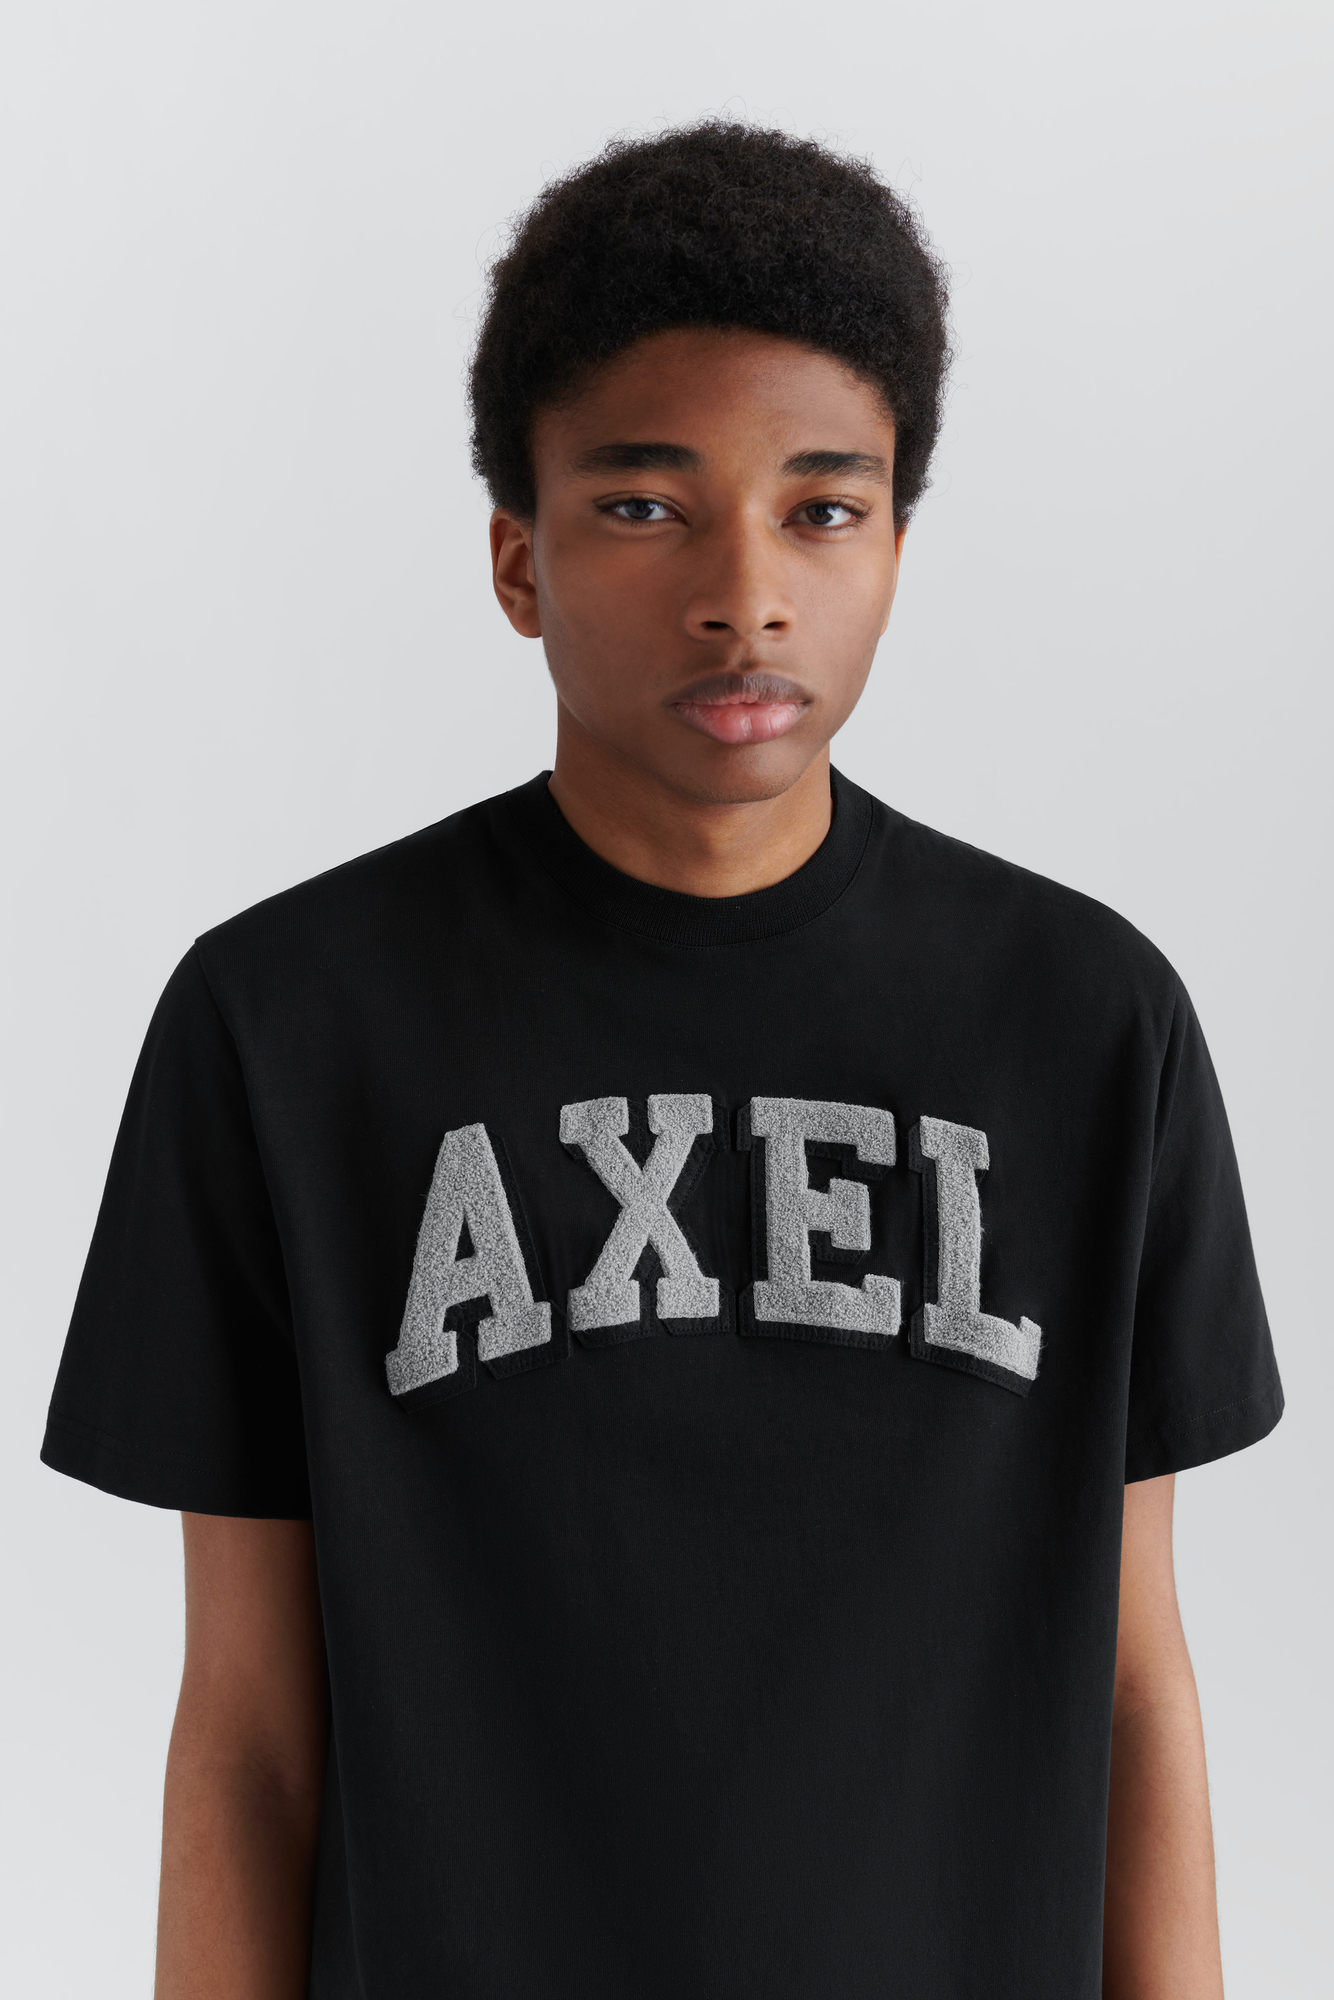 Axel Arc T-Shirt